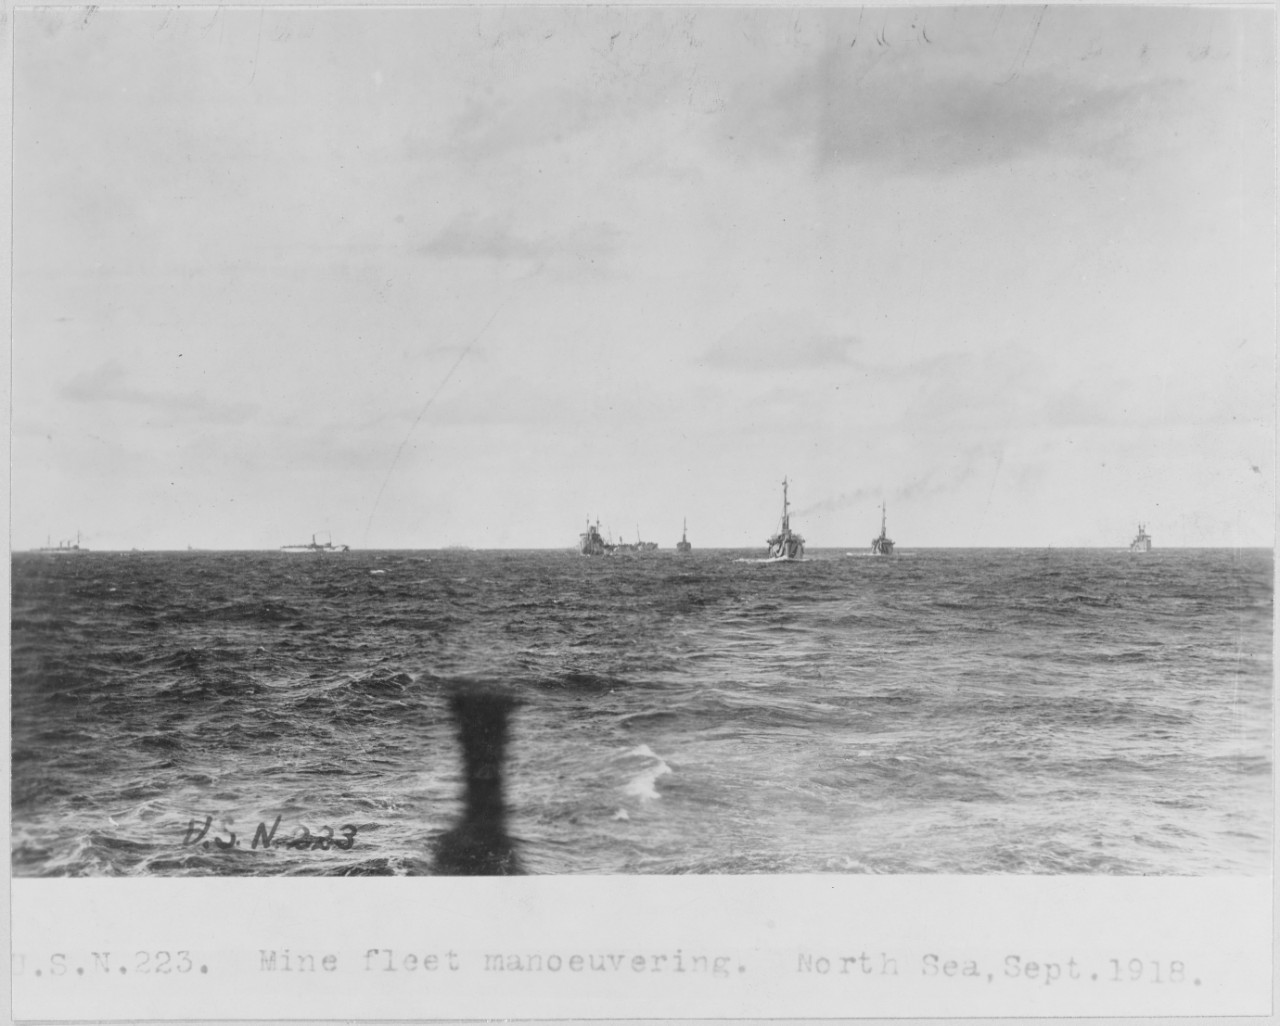 Mine fleet maneuvering. North Sea, September 1918. USN 223